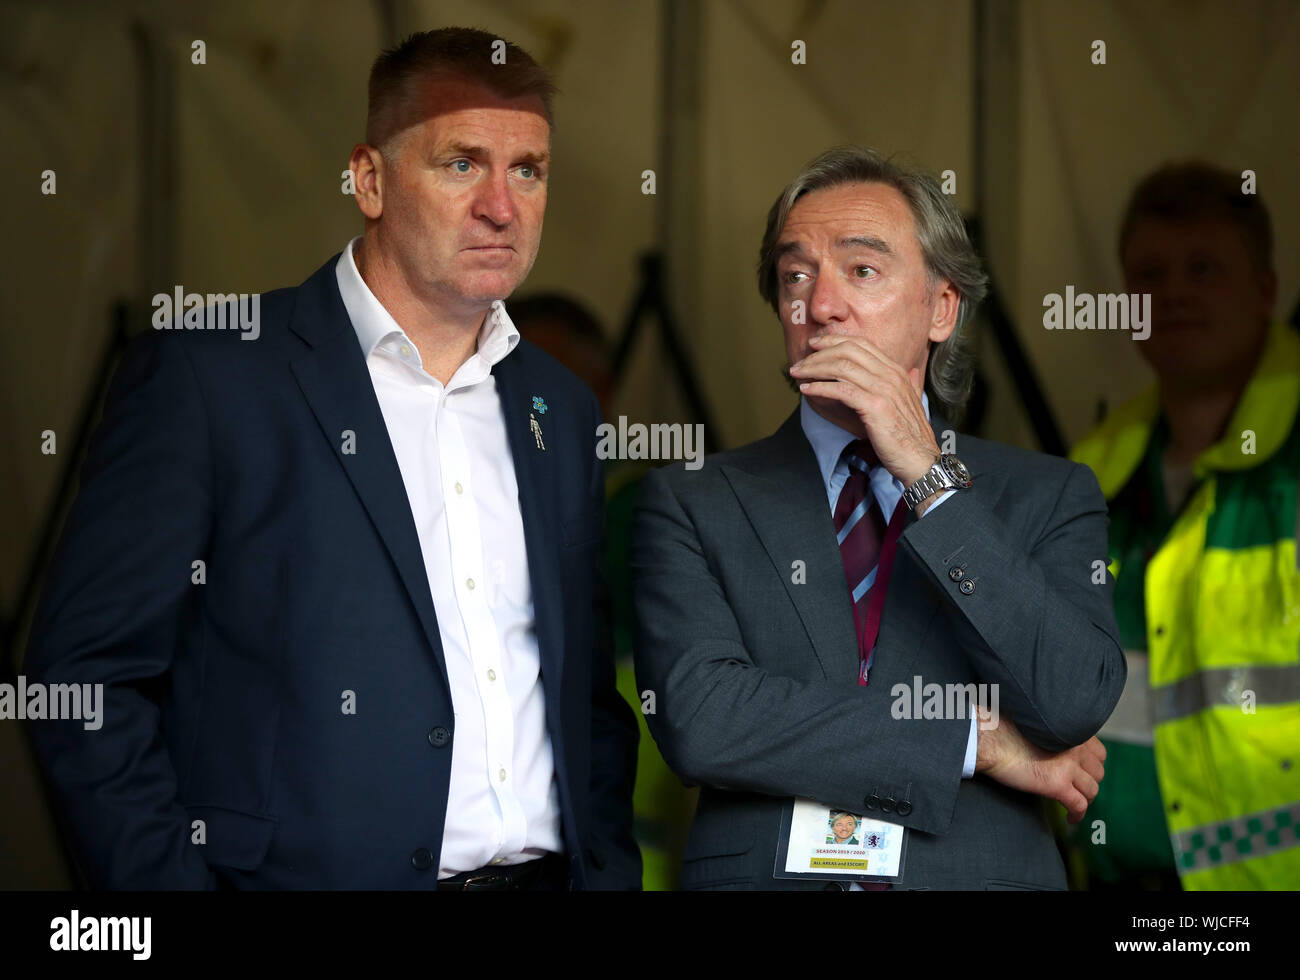 Aston Villa manager Dean Smith talks with Aston Villa Sporting Director Jesus Garia Pitarch (right) during the Premier League match at Villa Park, Birmingham. Stock Photo